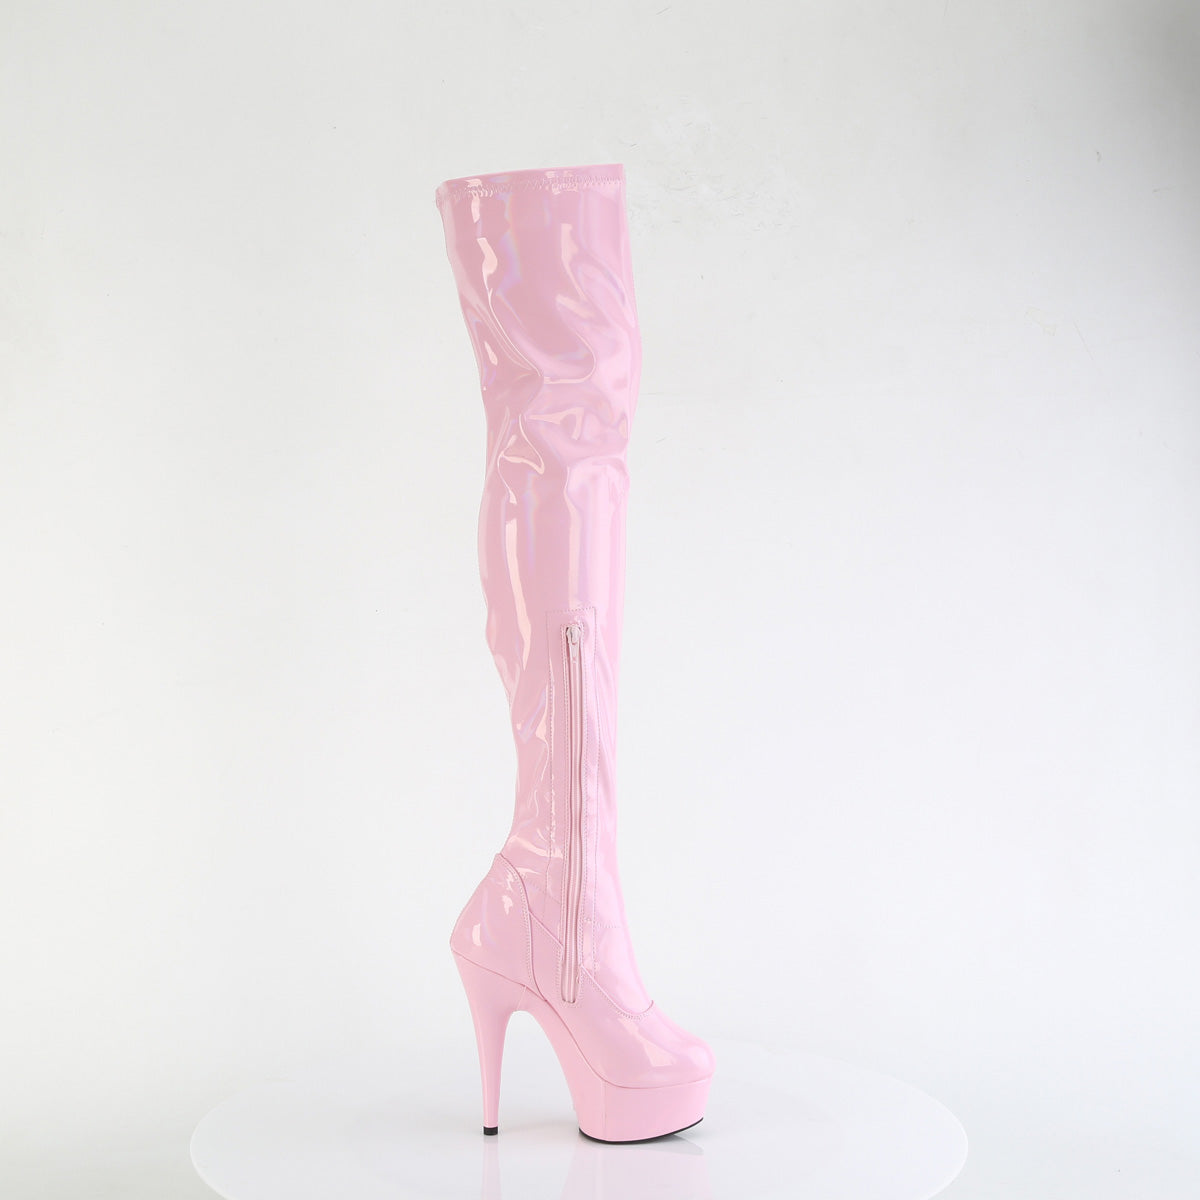 DELIGHT-3000HWR Pleaser B Pink Hologram Patent Platform Shoes [Thigh High Boots]